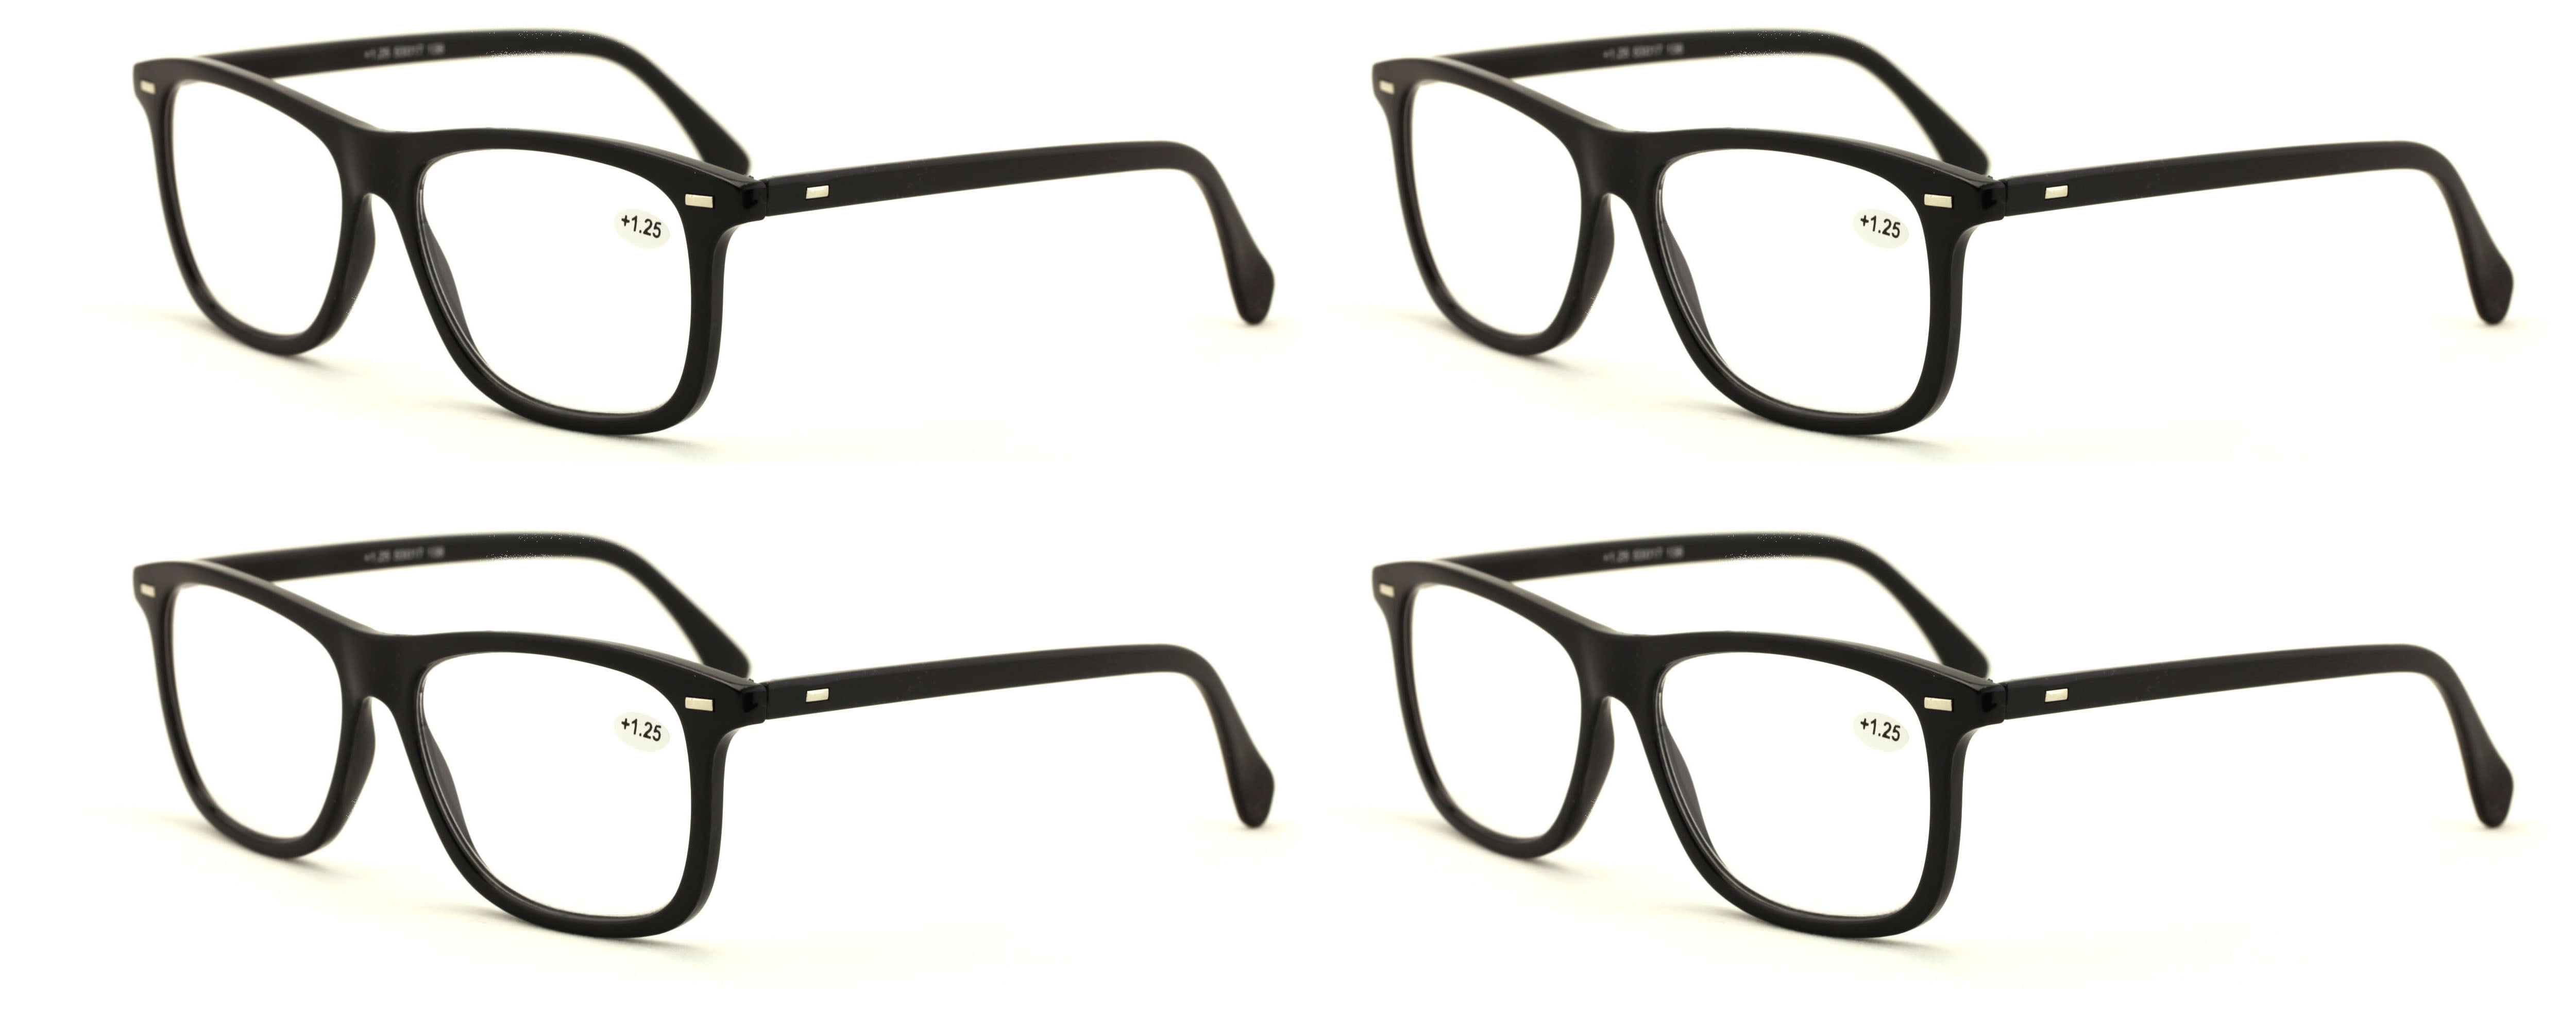 4 Pairs of Thin Lightweight Classic Reading Glasses - Black Tortoise Unisex Readers